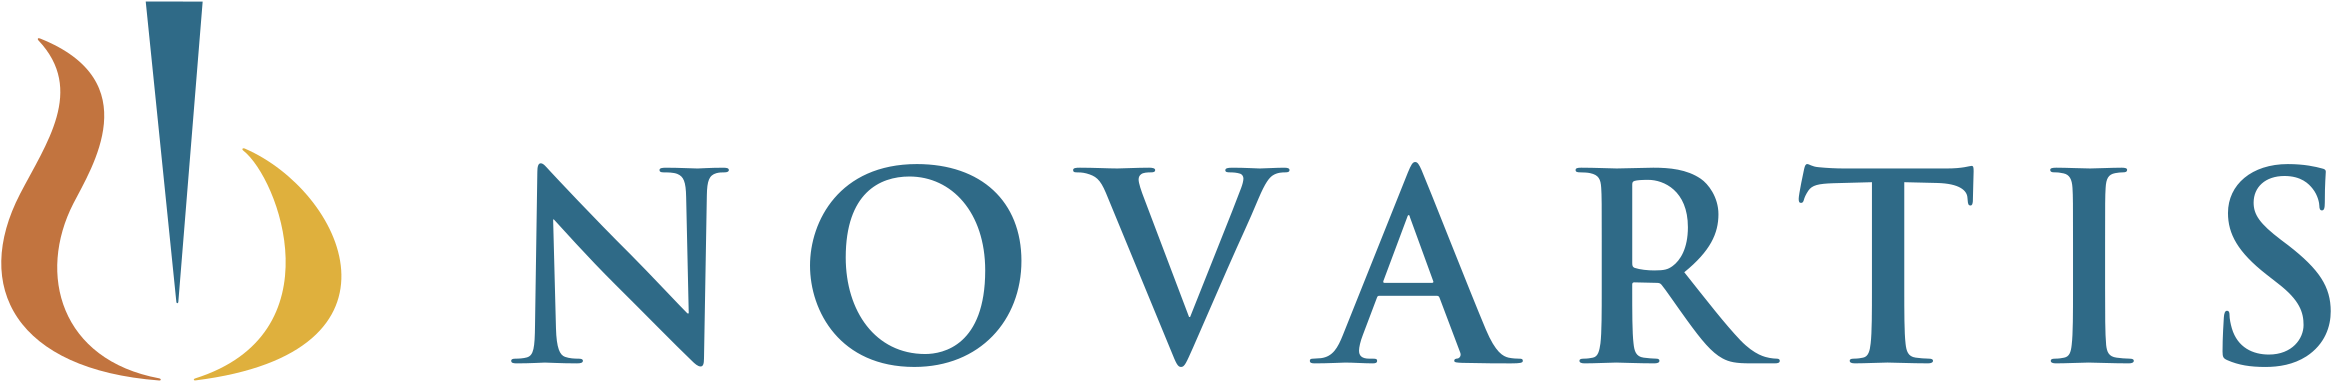 Novartis Logo Png Transparent - Novartis Logo Transparent (2400x2400), Png Download